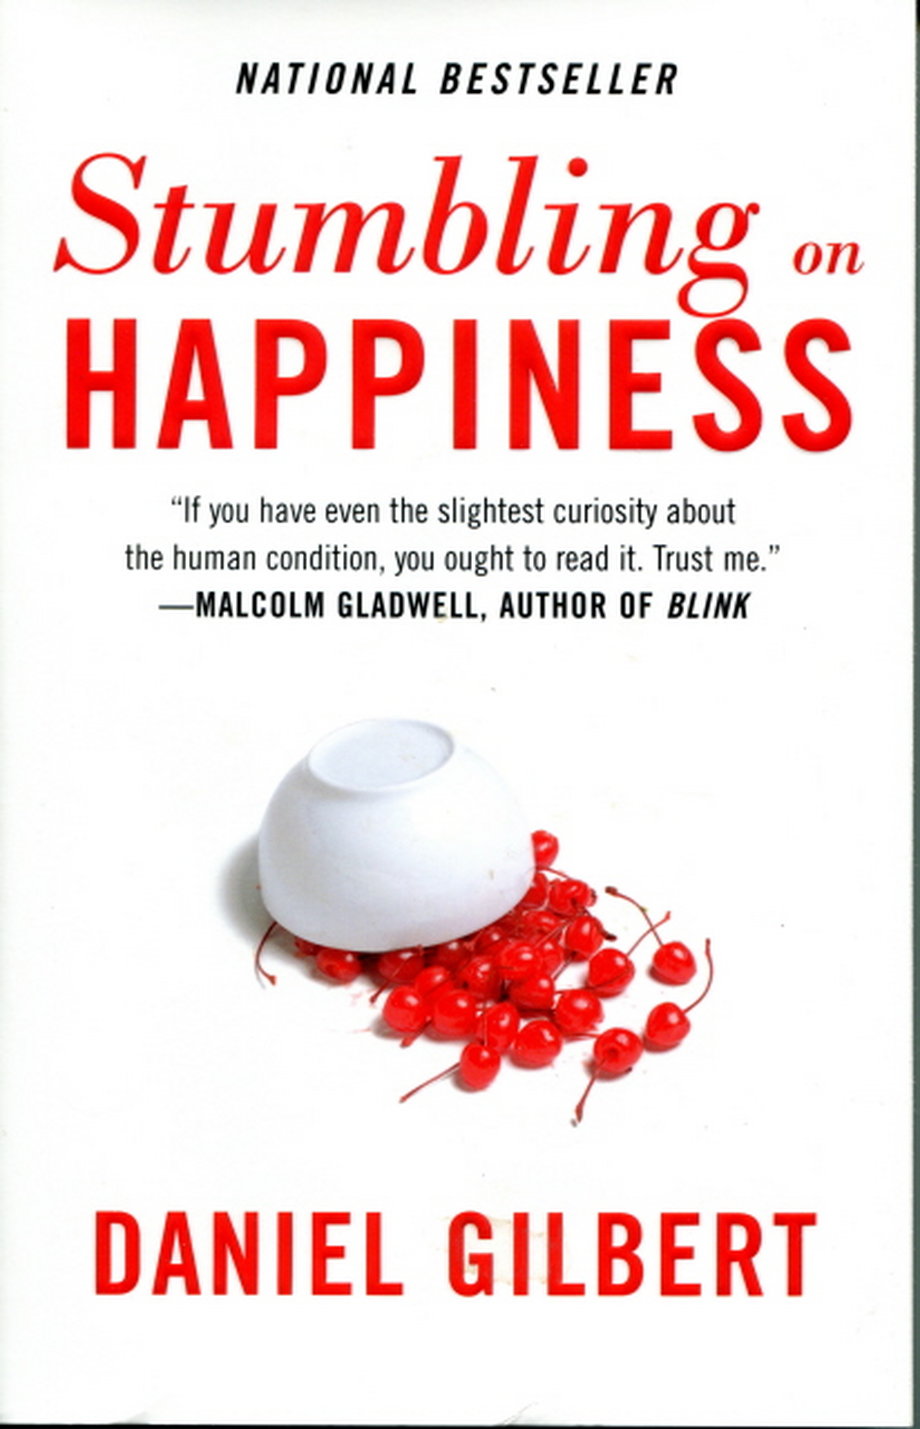 'Stumbling on Happiness' by Daniel Gilbert